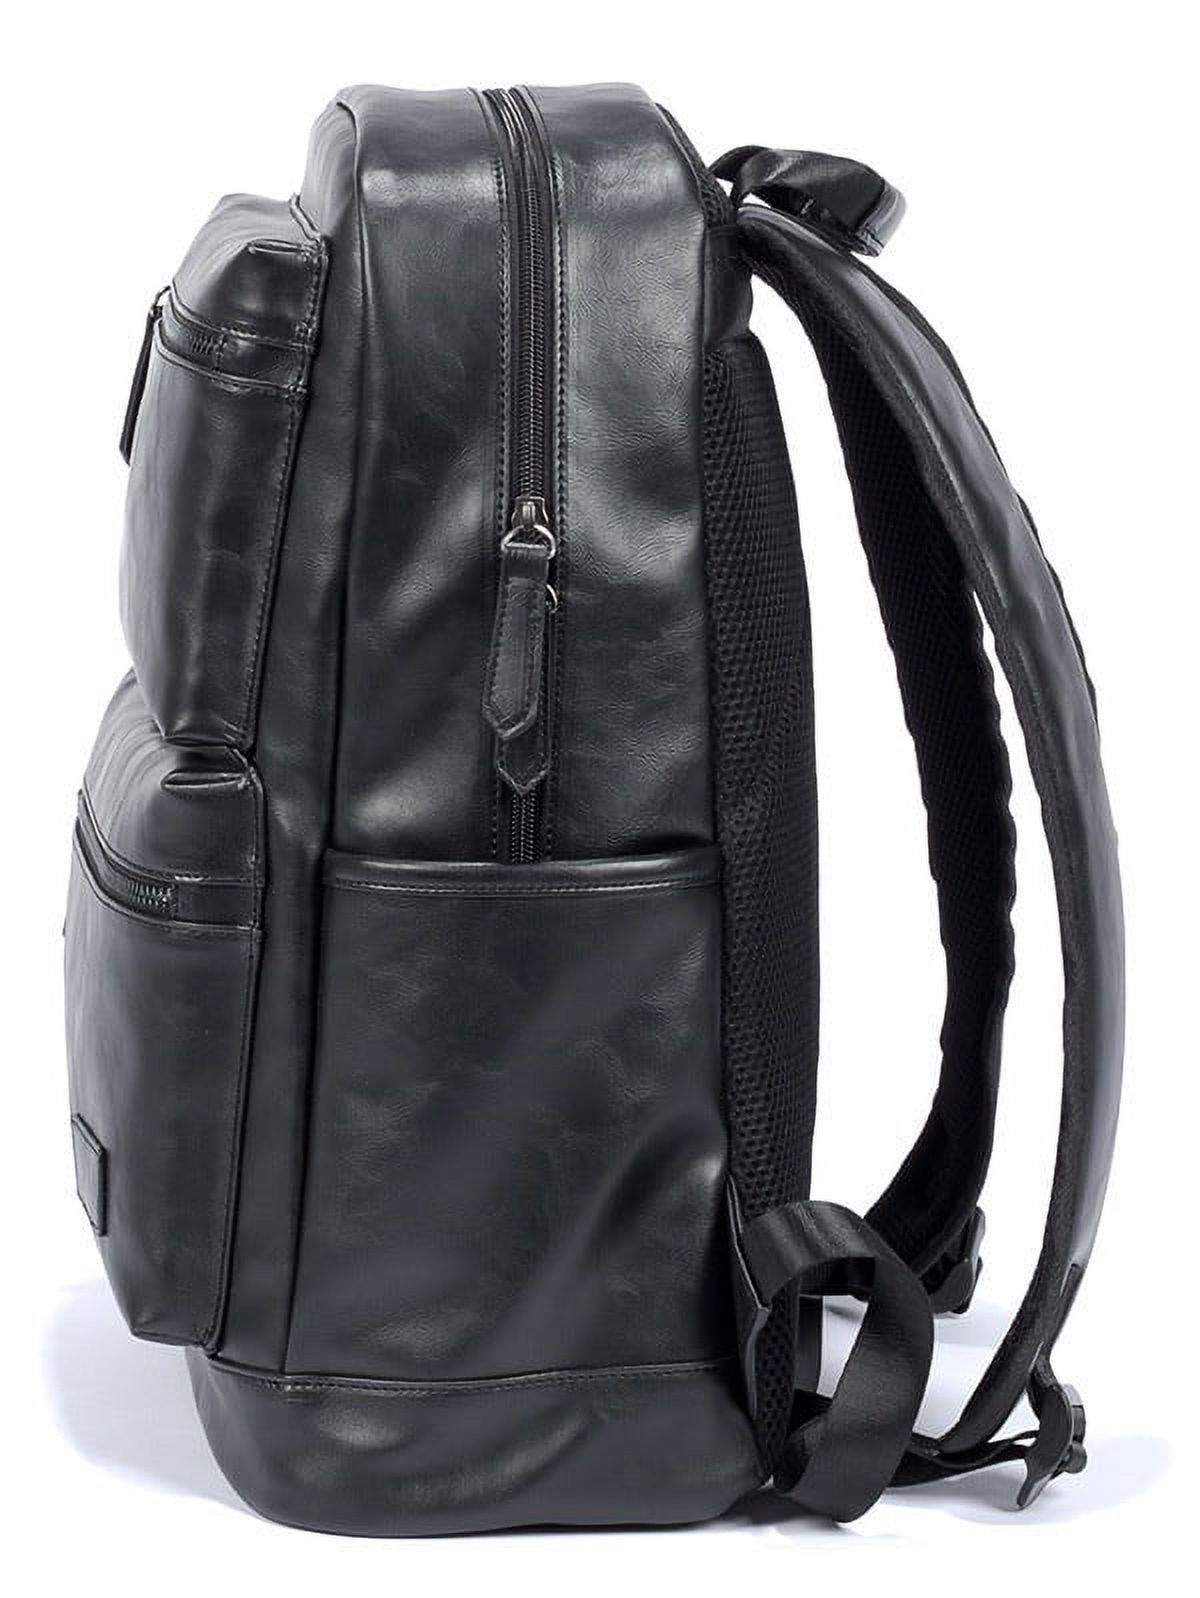 PU Leather Backpack Waterproof Travel Daypack School College Laptop Backpack College Rucksack Bookbag for Men - image 2 of 3